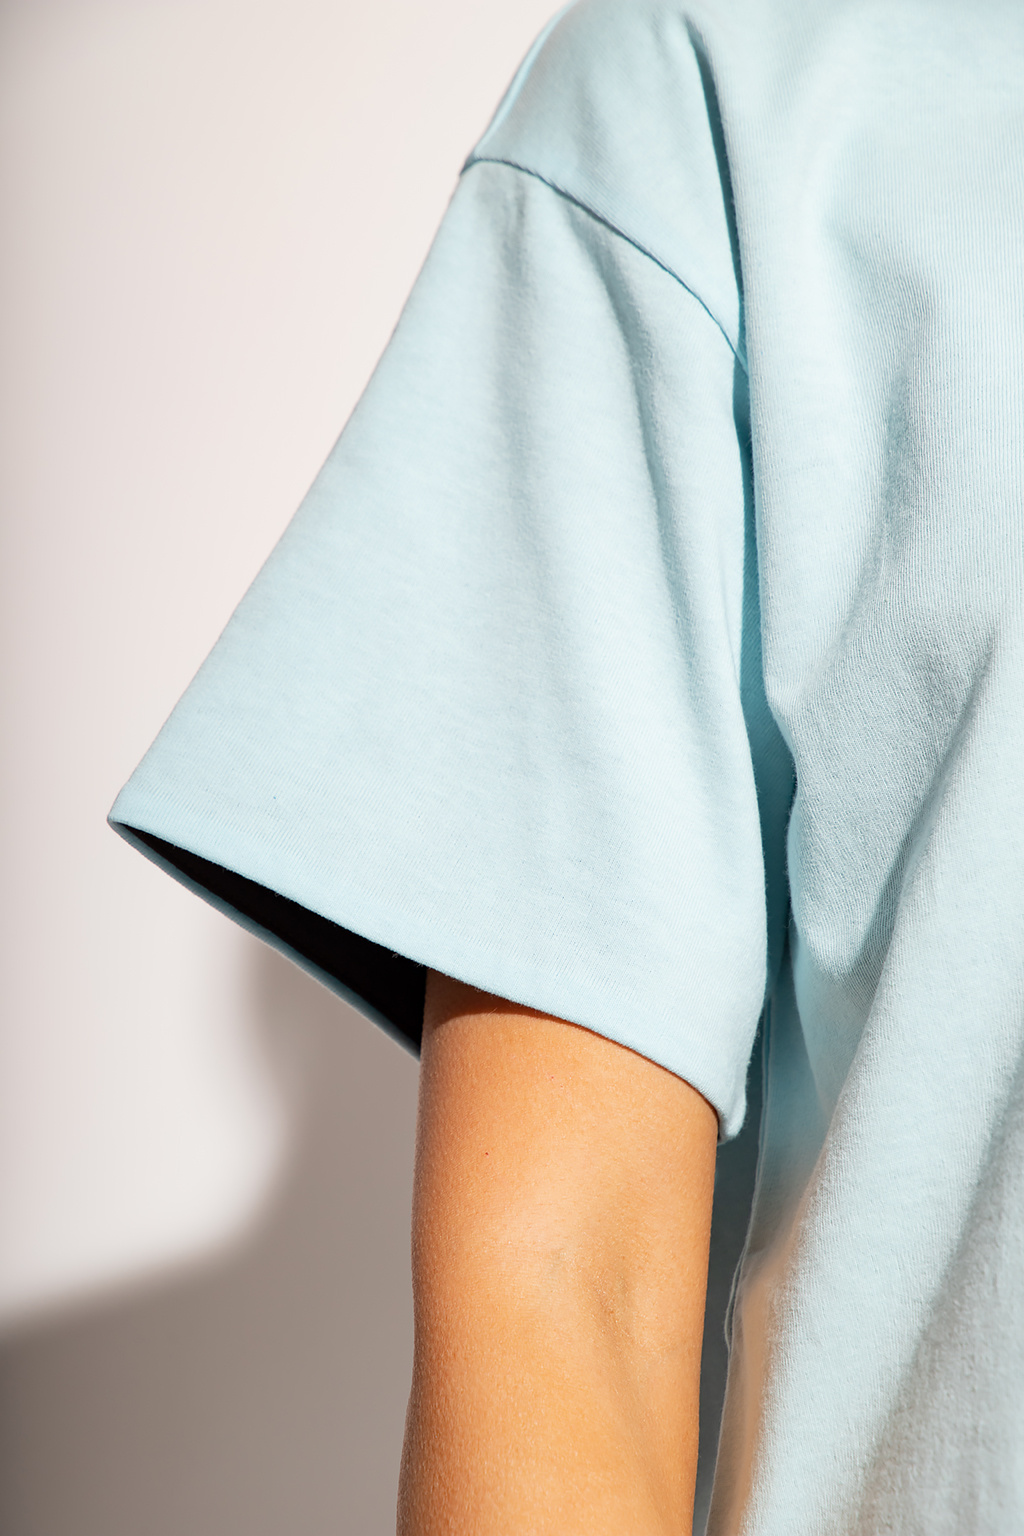 Louis Vuitton Monogram Wave Self-Tie T-Shirt